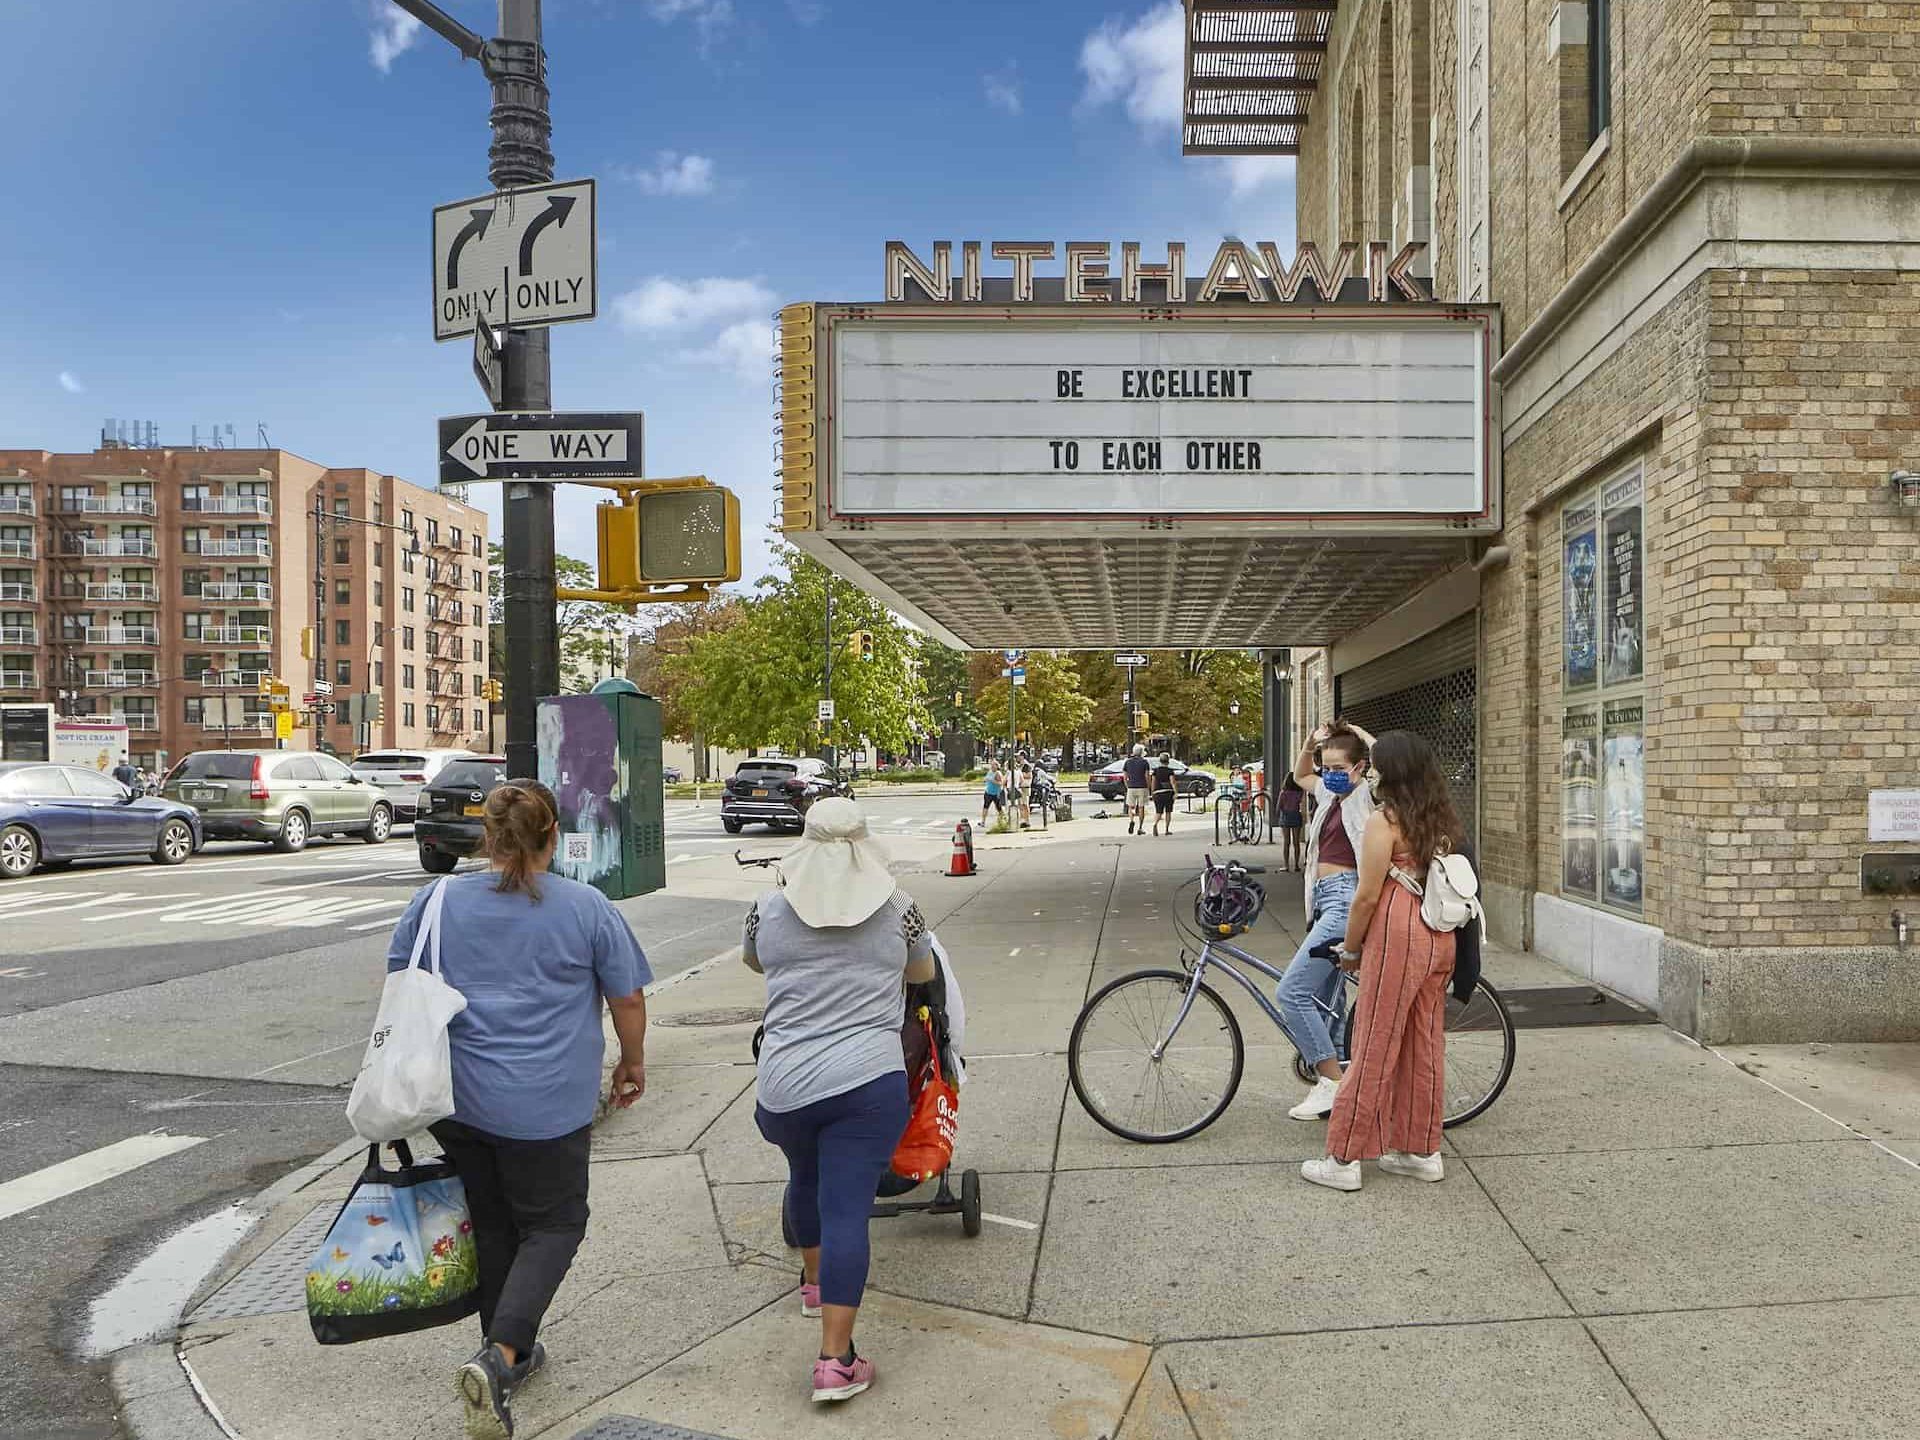 Street view of NiteHawk Cinema in Brooklyn, NY. Pedestrians walking on the sidewalk below a theater sign.